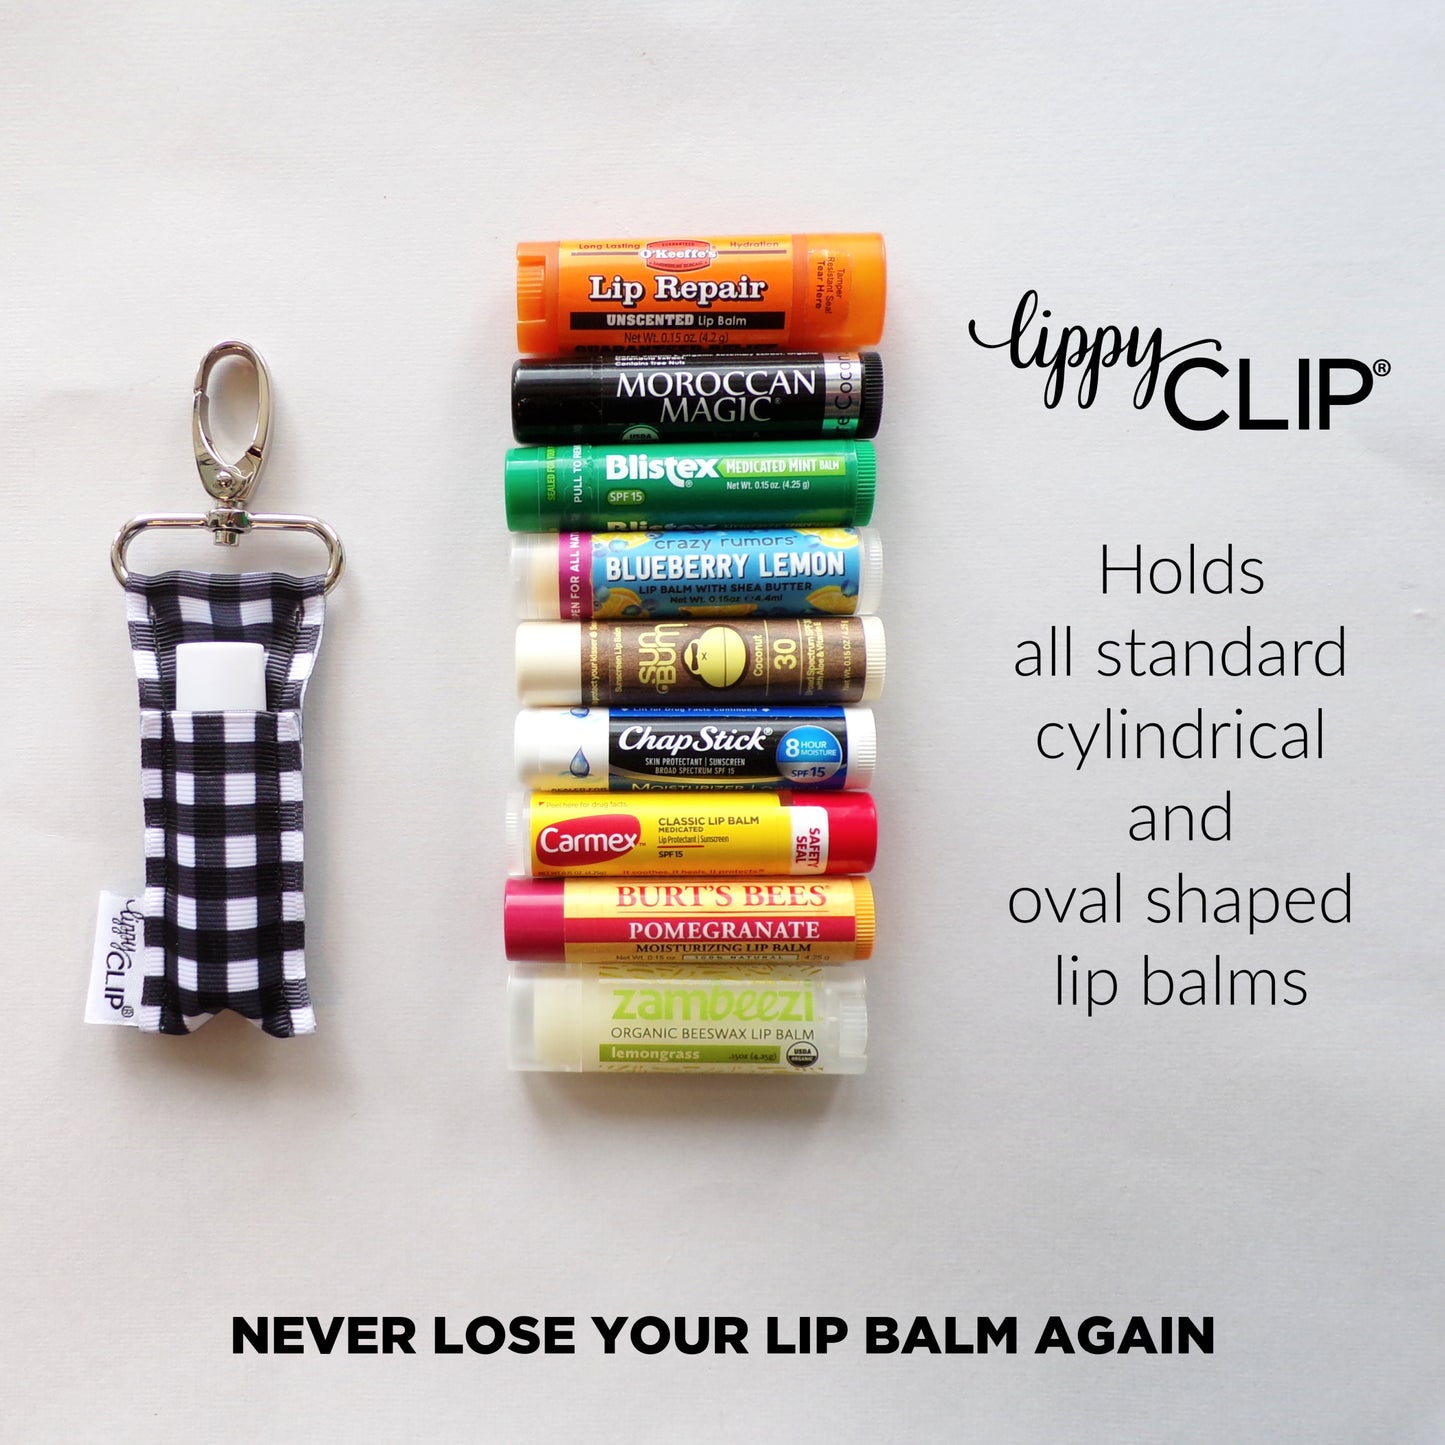 Black and White Check LippyClip® Lip Balm Holder